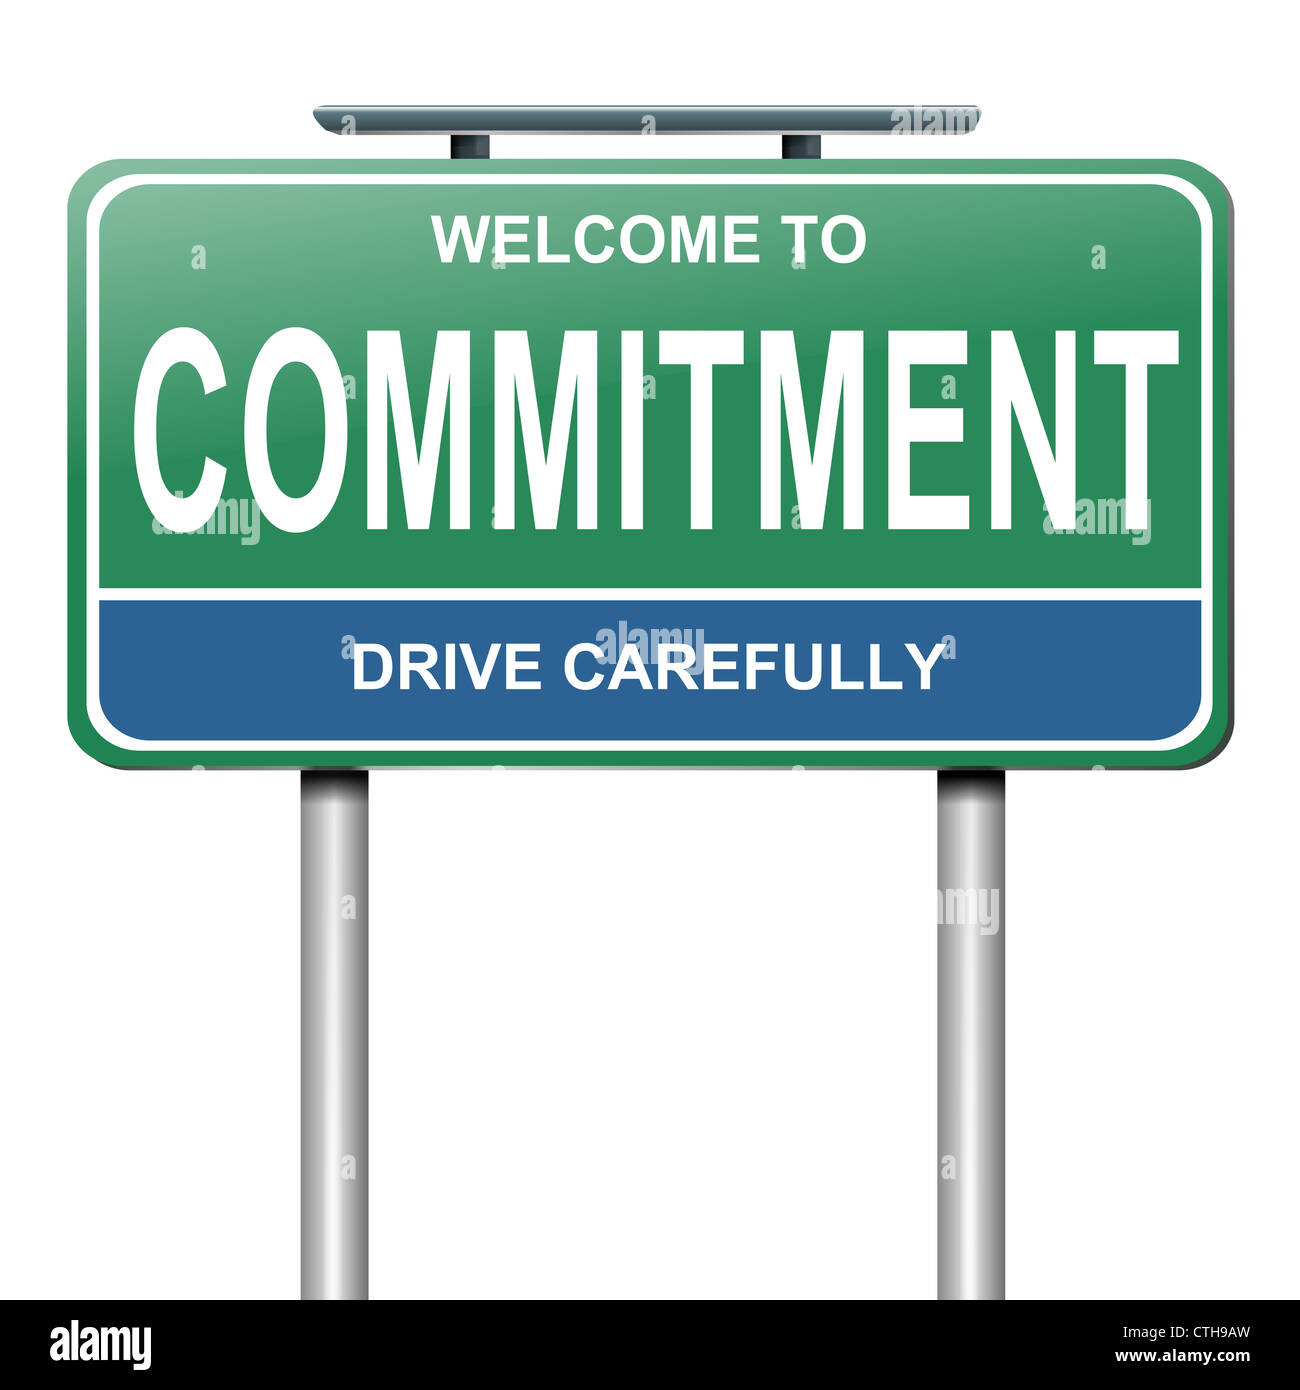 Commitment concept. Stock Photo